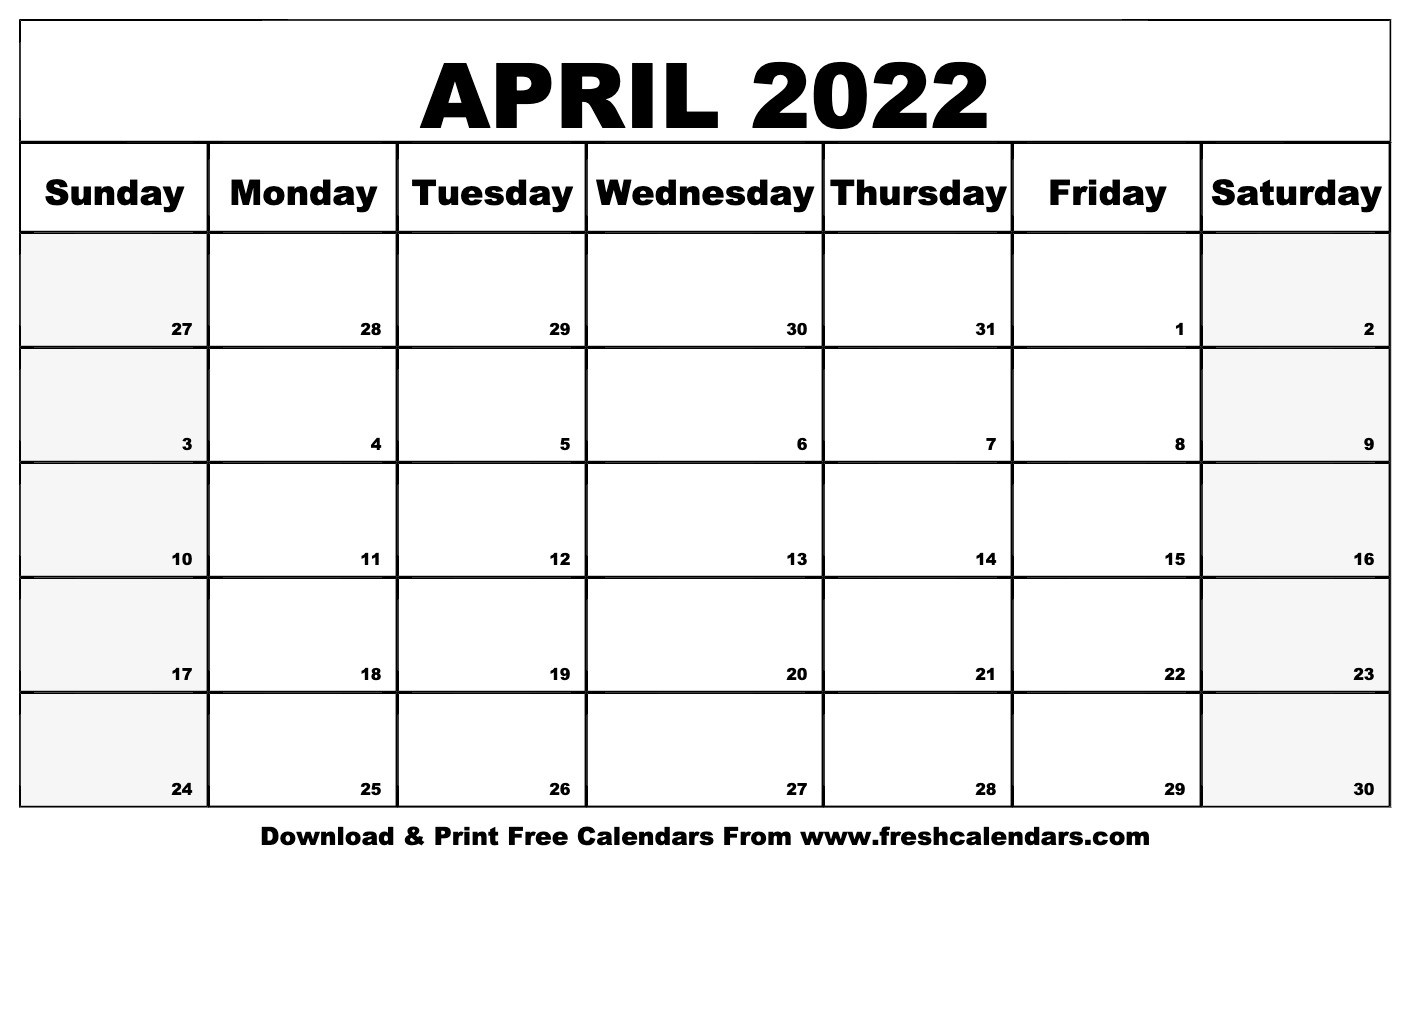 Chickfila Calendar April 2022 - July 2022 Calendar  Calendar 2022 January To April